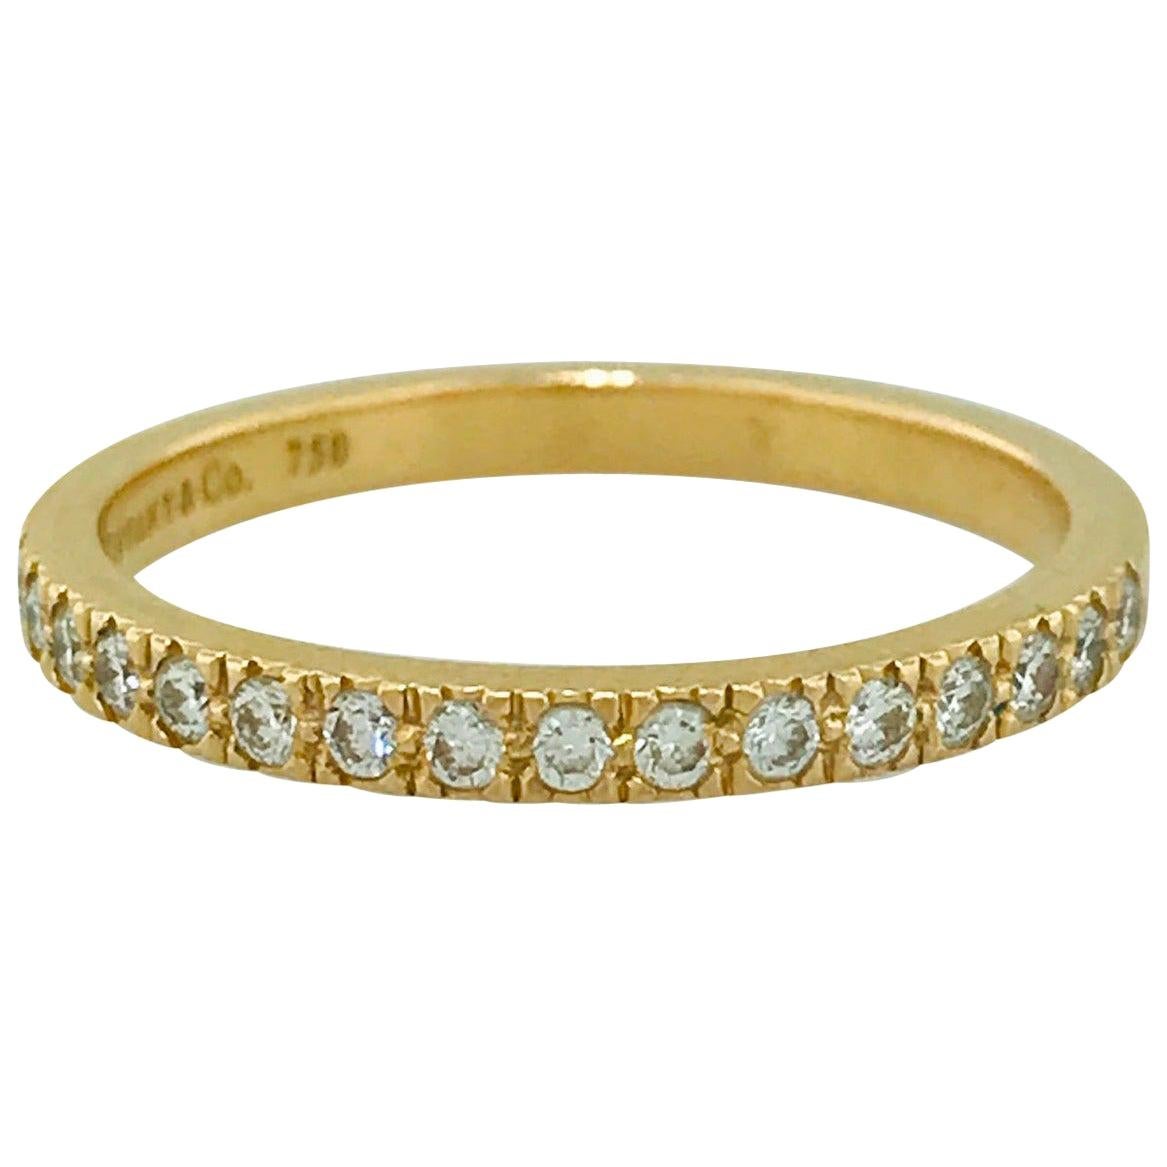 Tiffany & Co. Diamond 18 Karat Gold Band, Rose Gold Tiffany & Co. Ring .30 Carat